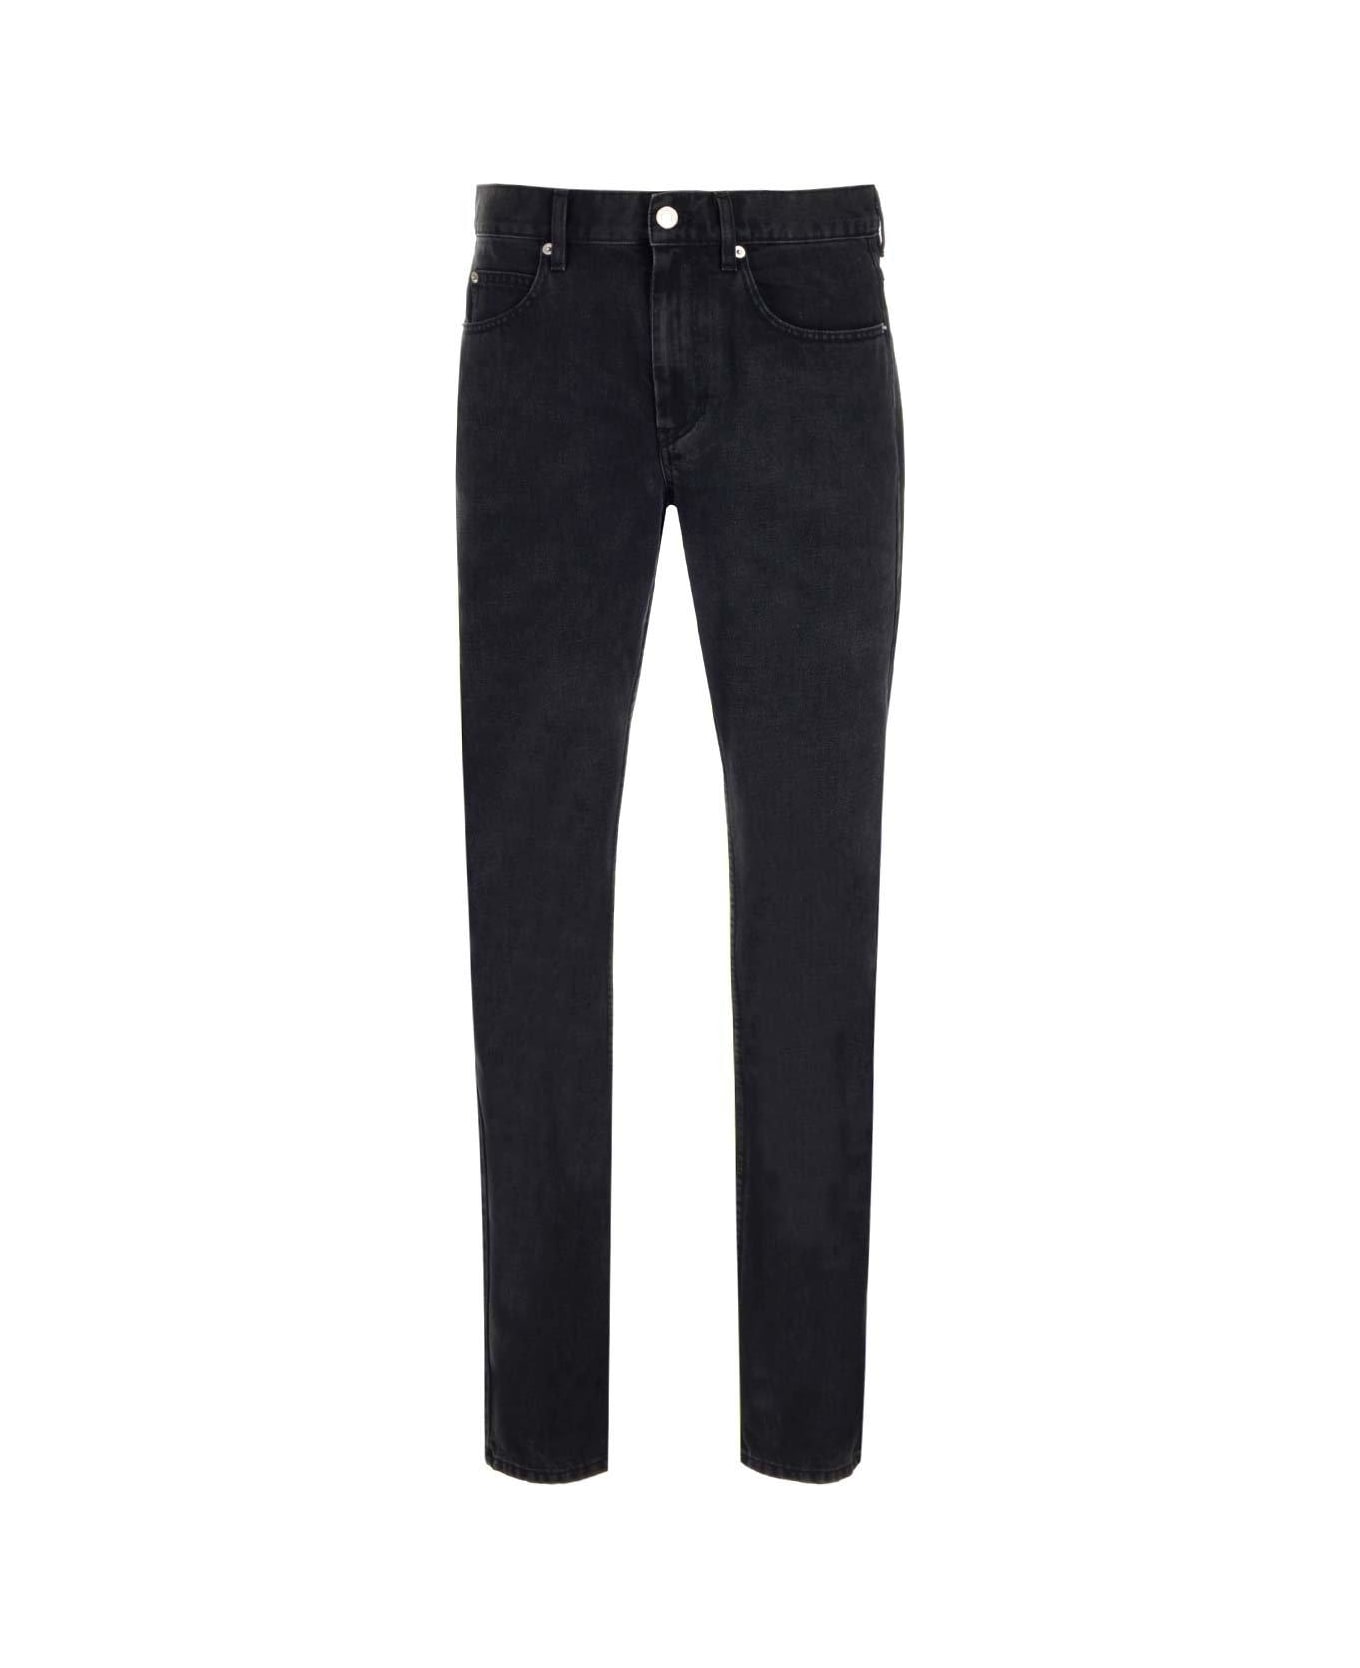 Isabel Marant Skinny Cut Jeans - Black